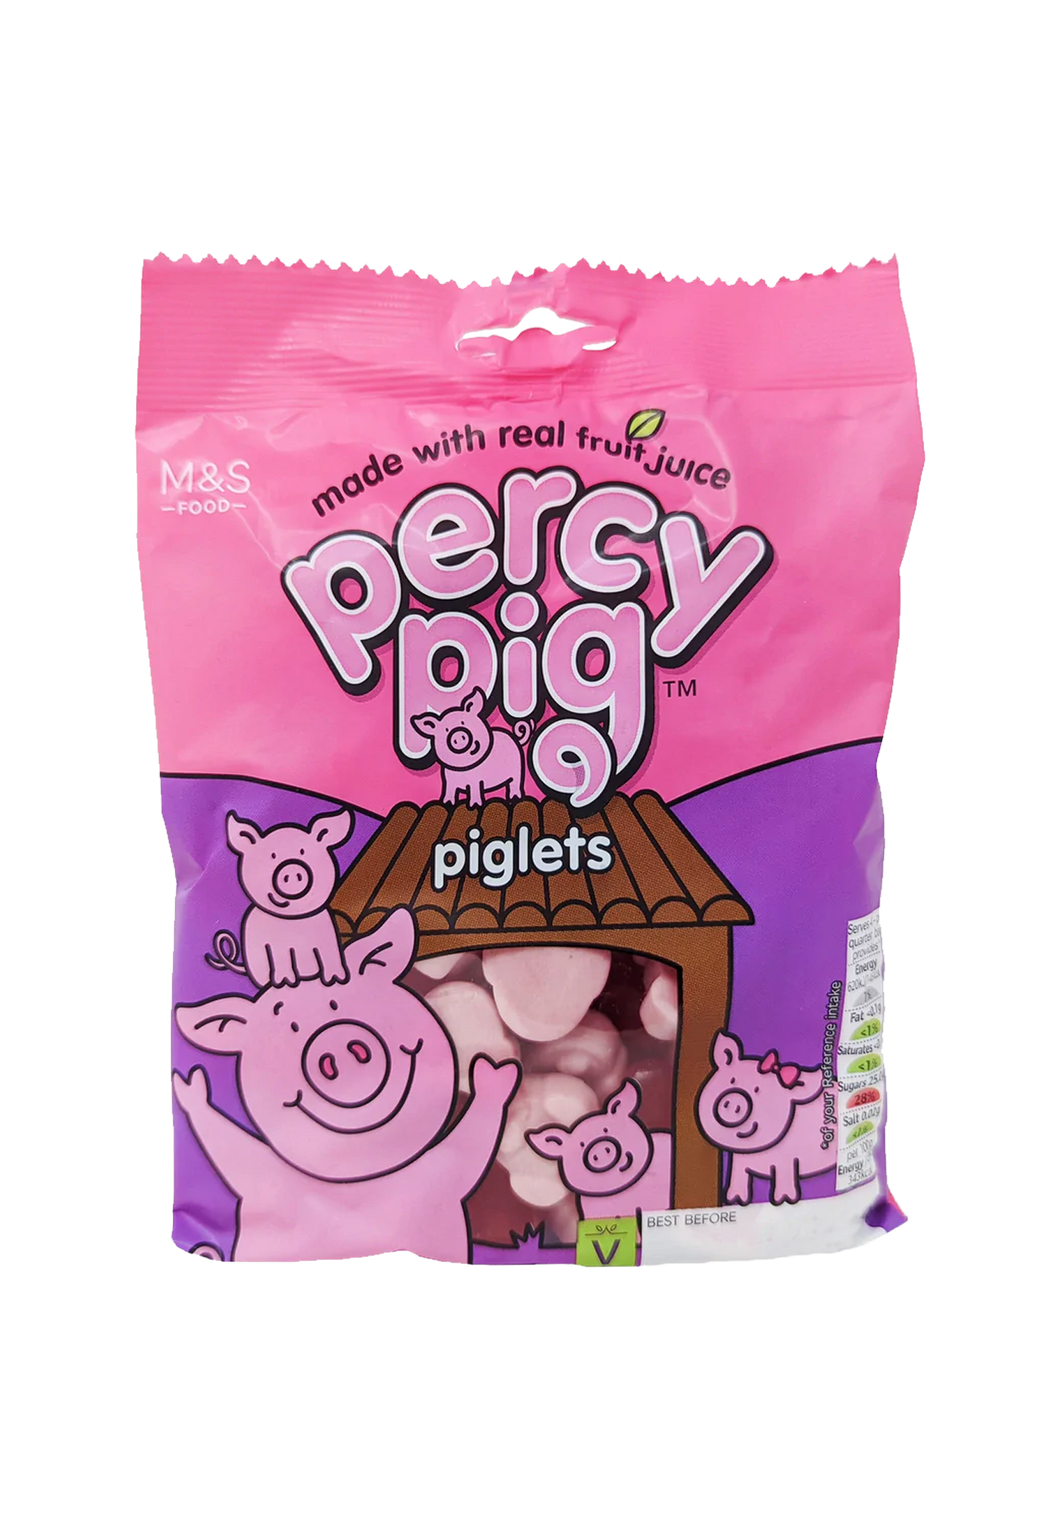 Percy Pig piglets 170g